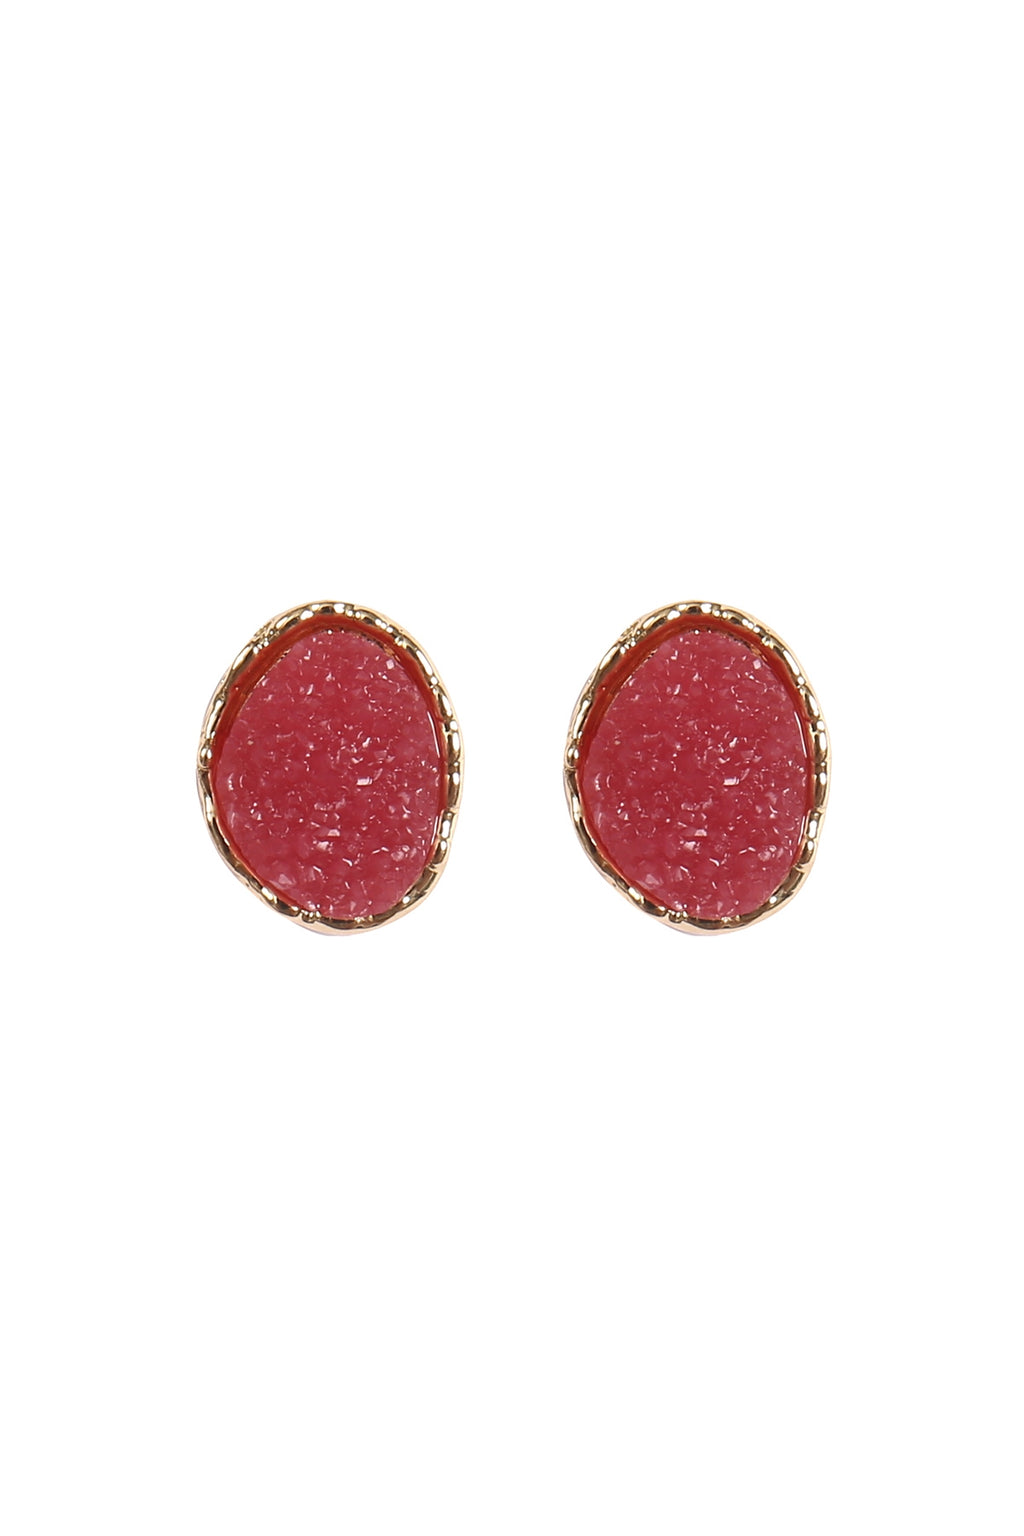 Oval Druzy Stone Post Earrings Gold Fuchsia - Pack of 6